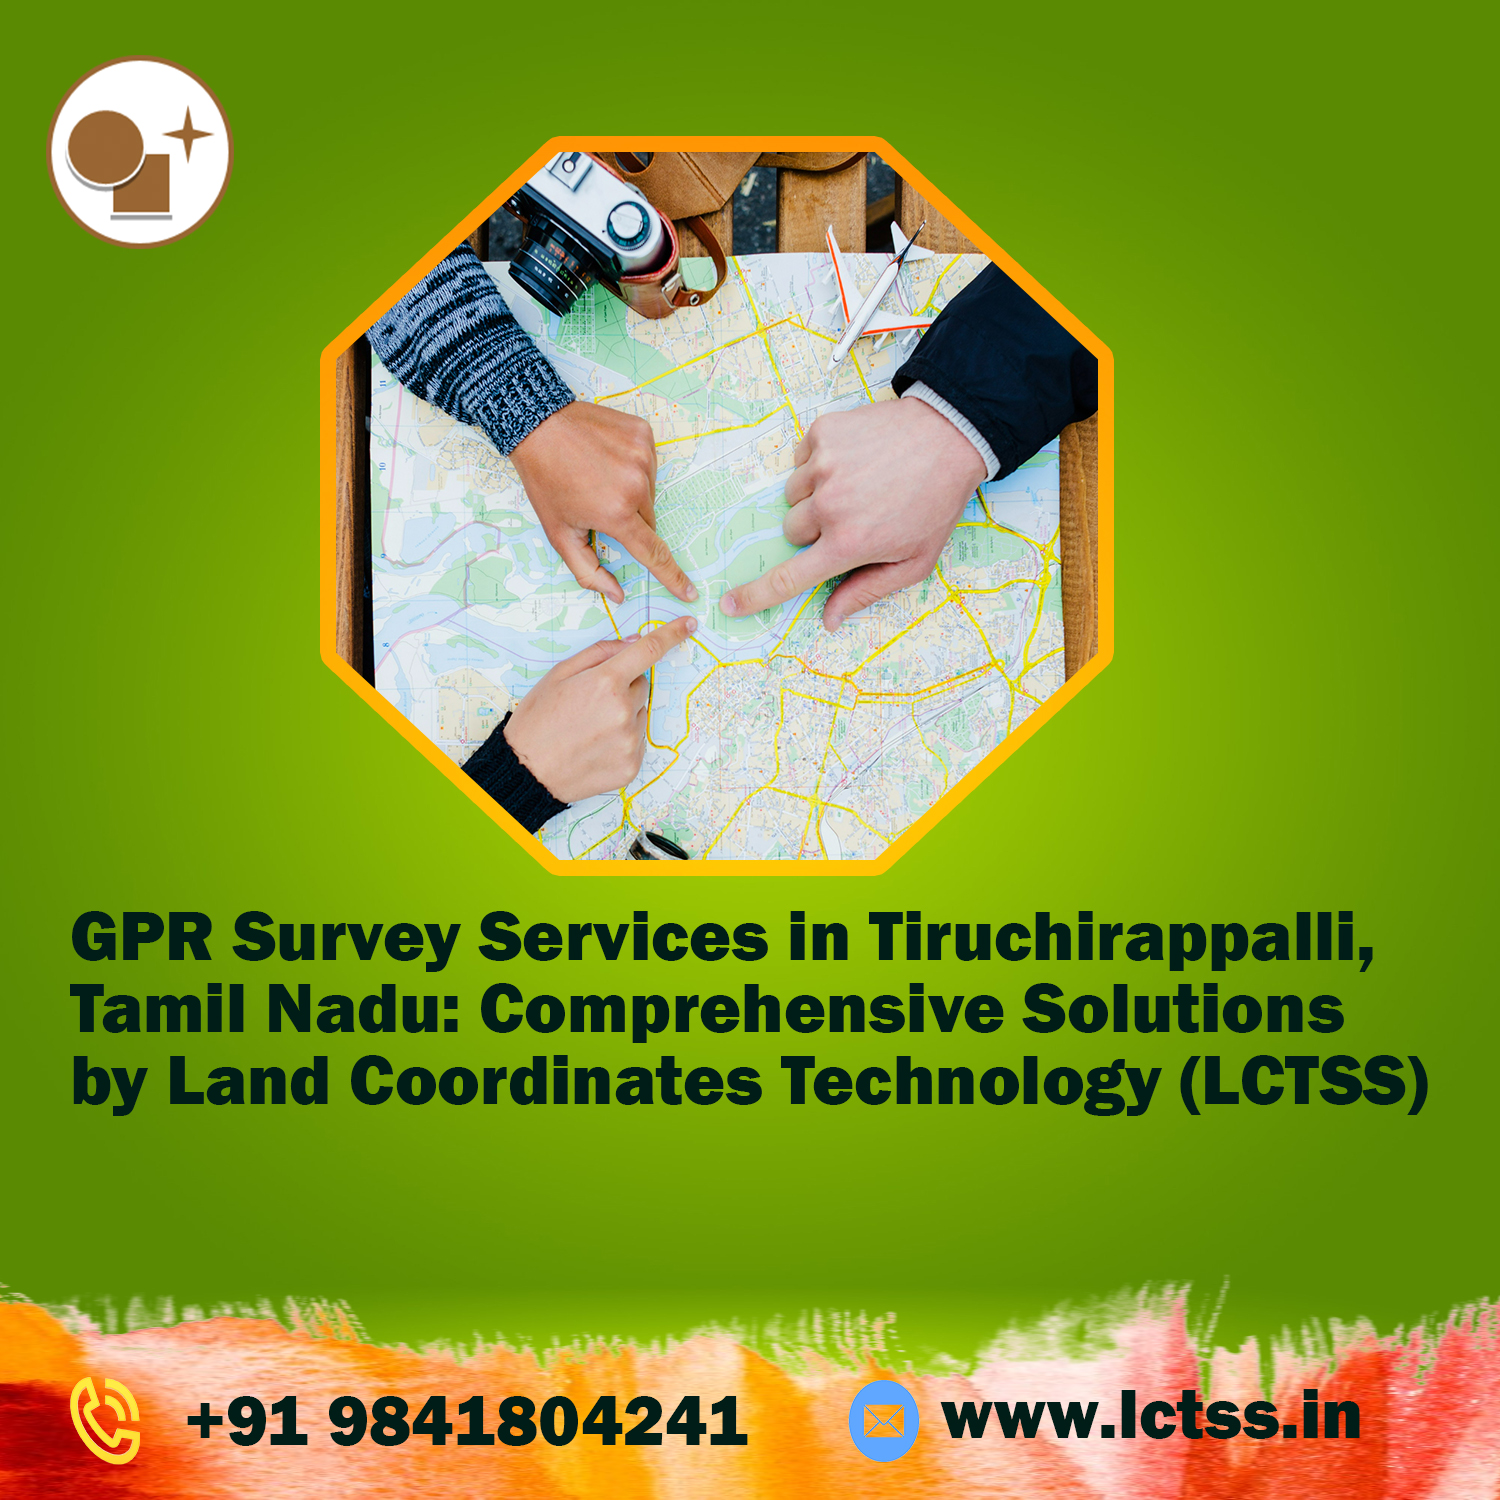 GPR Survey Services in Tiruchirappalli, Tamil Nadu: Comprehensive Solutions by Land Coordinates Technology (LCTSS)